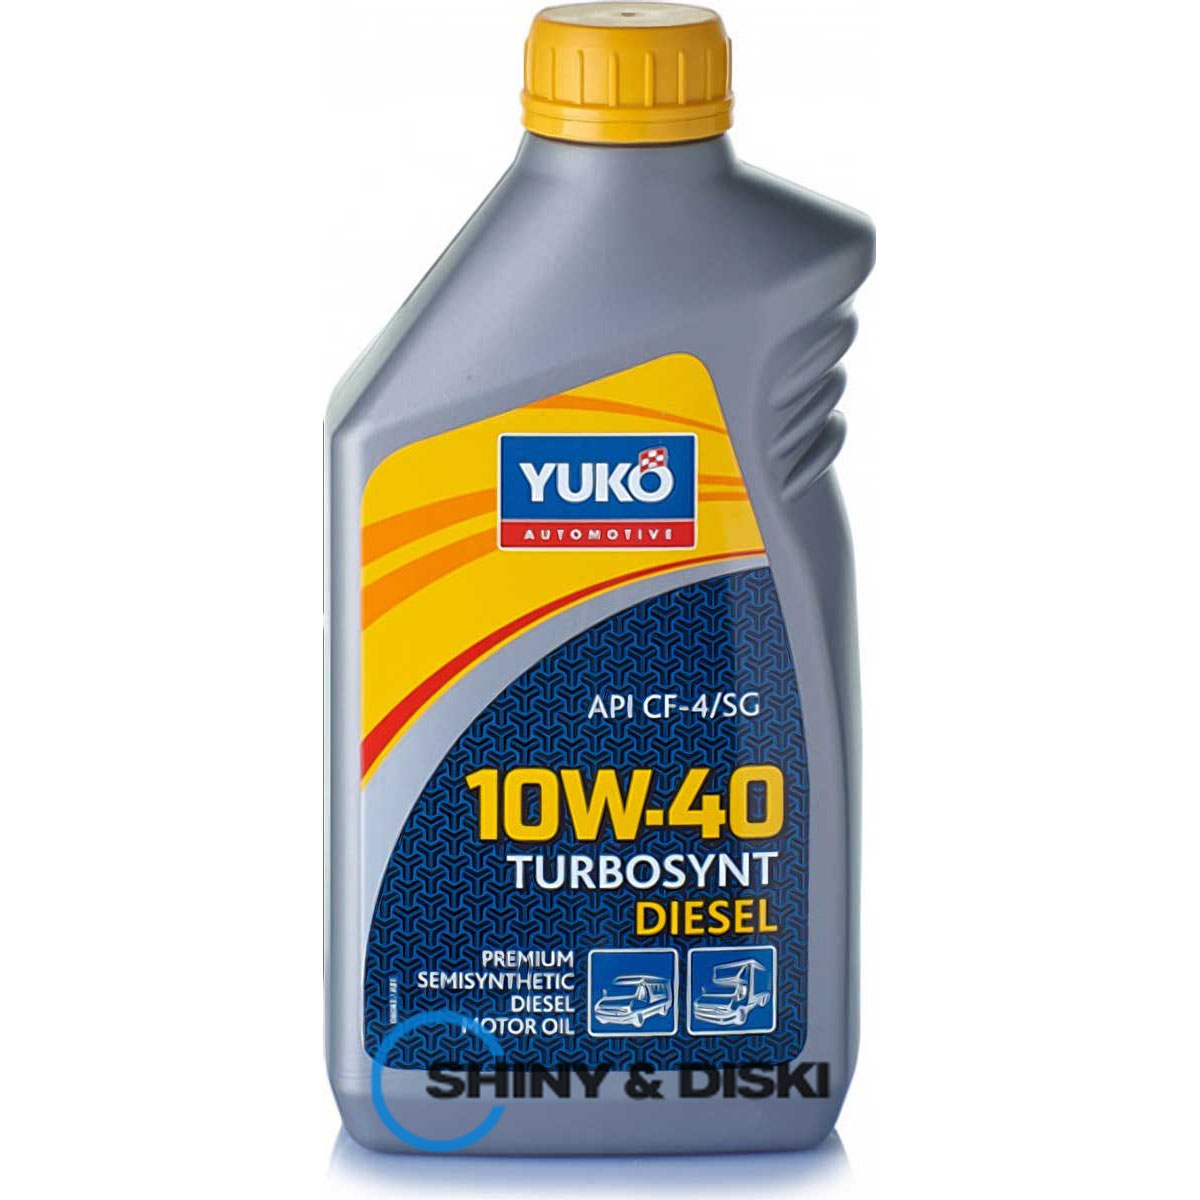 yuko turbosynt diesel 10w-40 (1л)